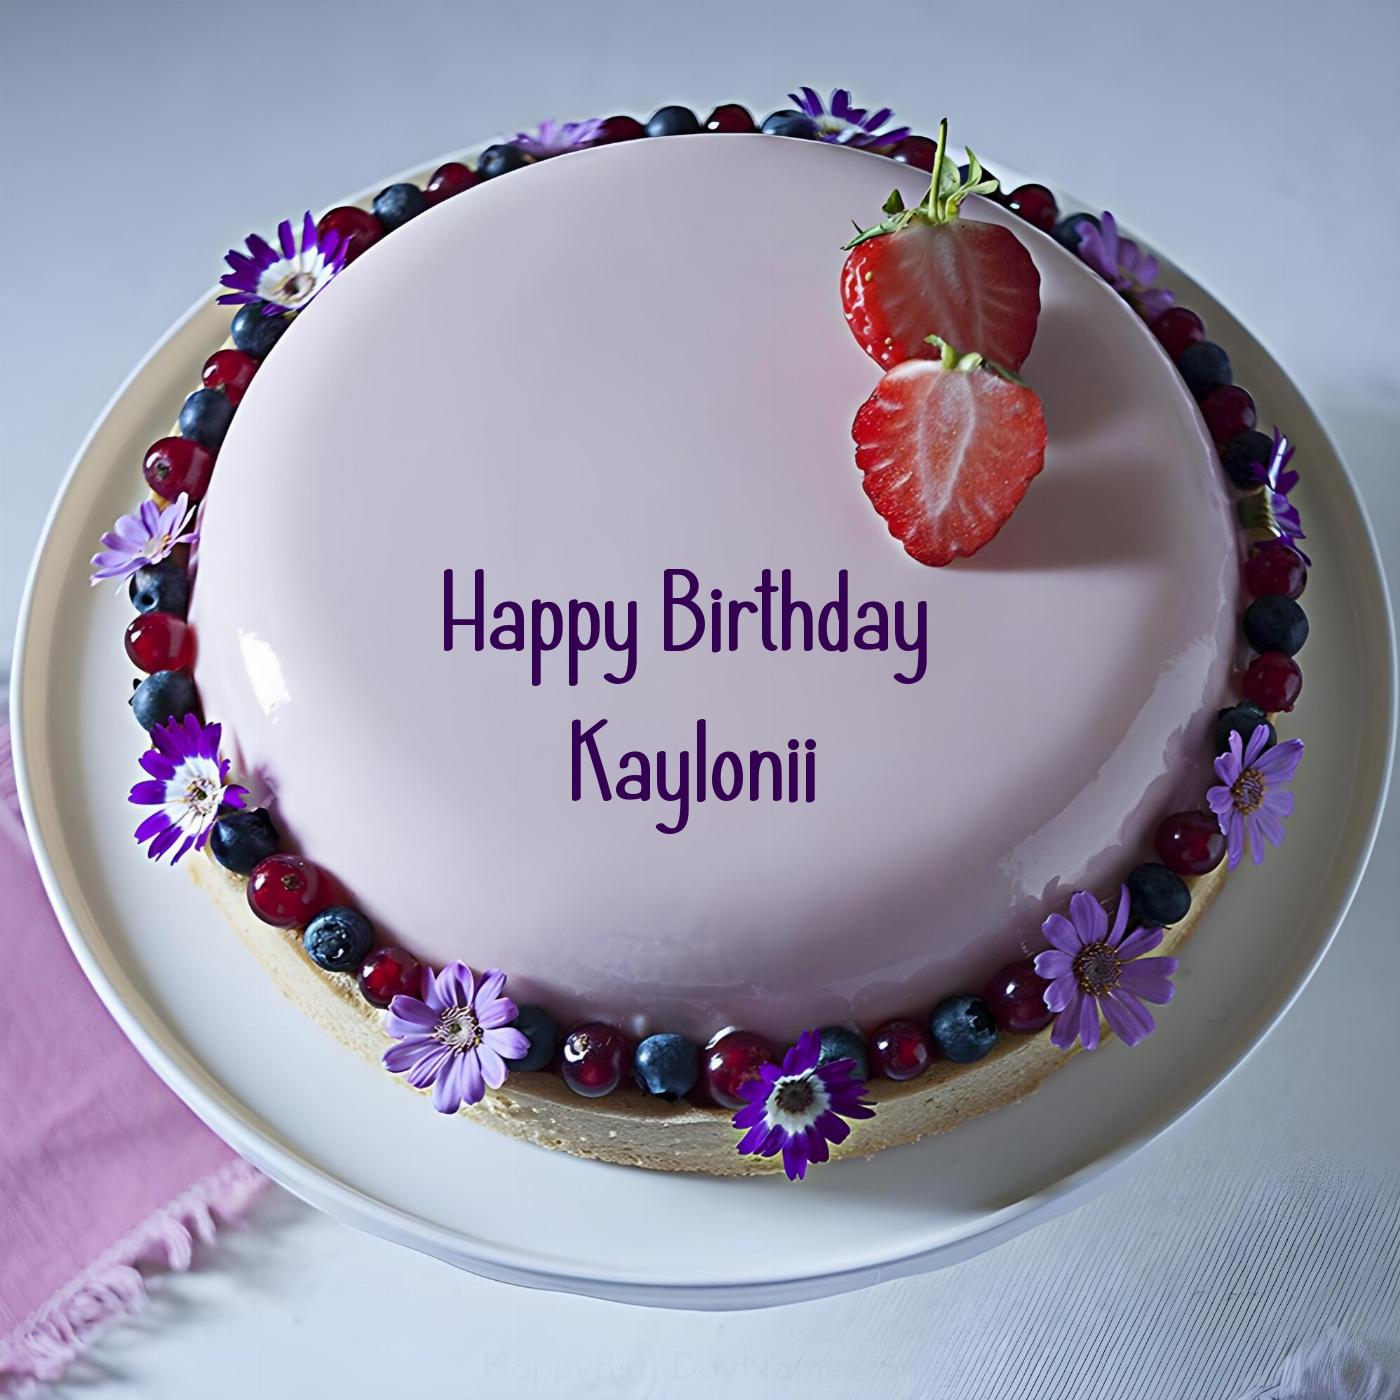 Happy Birthday Kaylonii Strawberry Flowers Cake